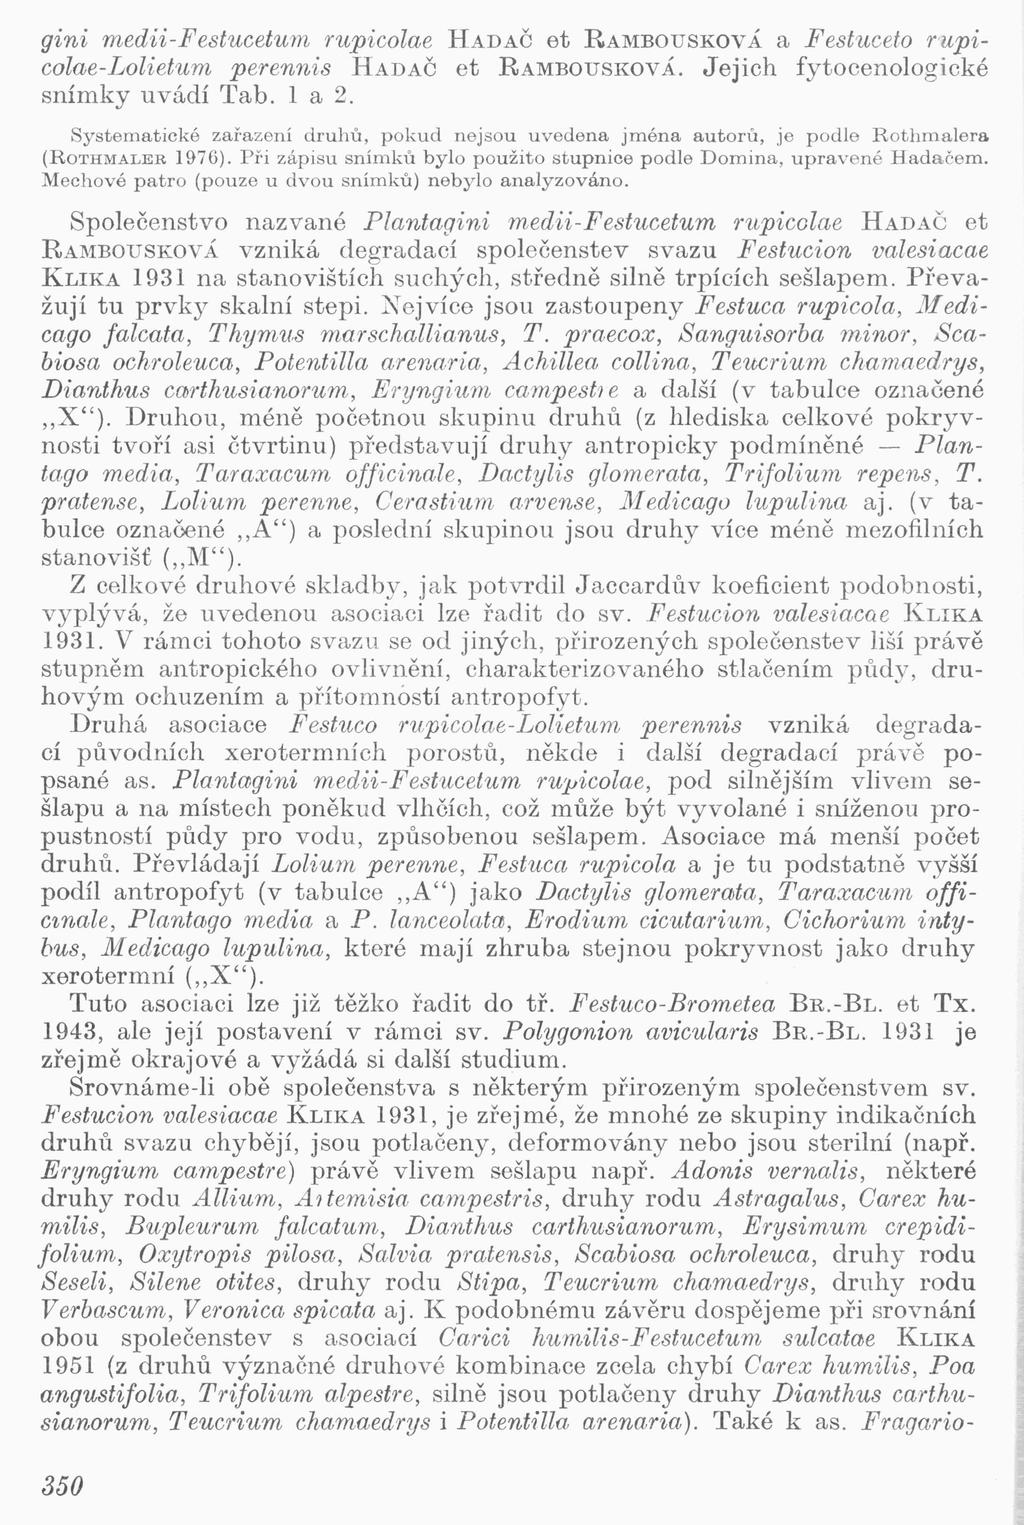 gini medii-festucetum rupicolae HADAČ et RAMBOUSKOVÁ a Festuceto rupicolae-lolietum p erennis HADAČ et RAMBOUSKOVÁ. Jejich fytocenologické snímky uv:idí Tab. 1 a 2.